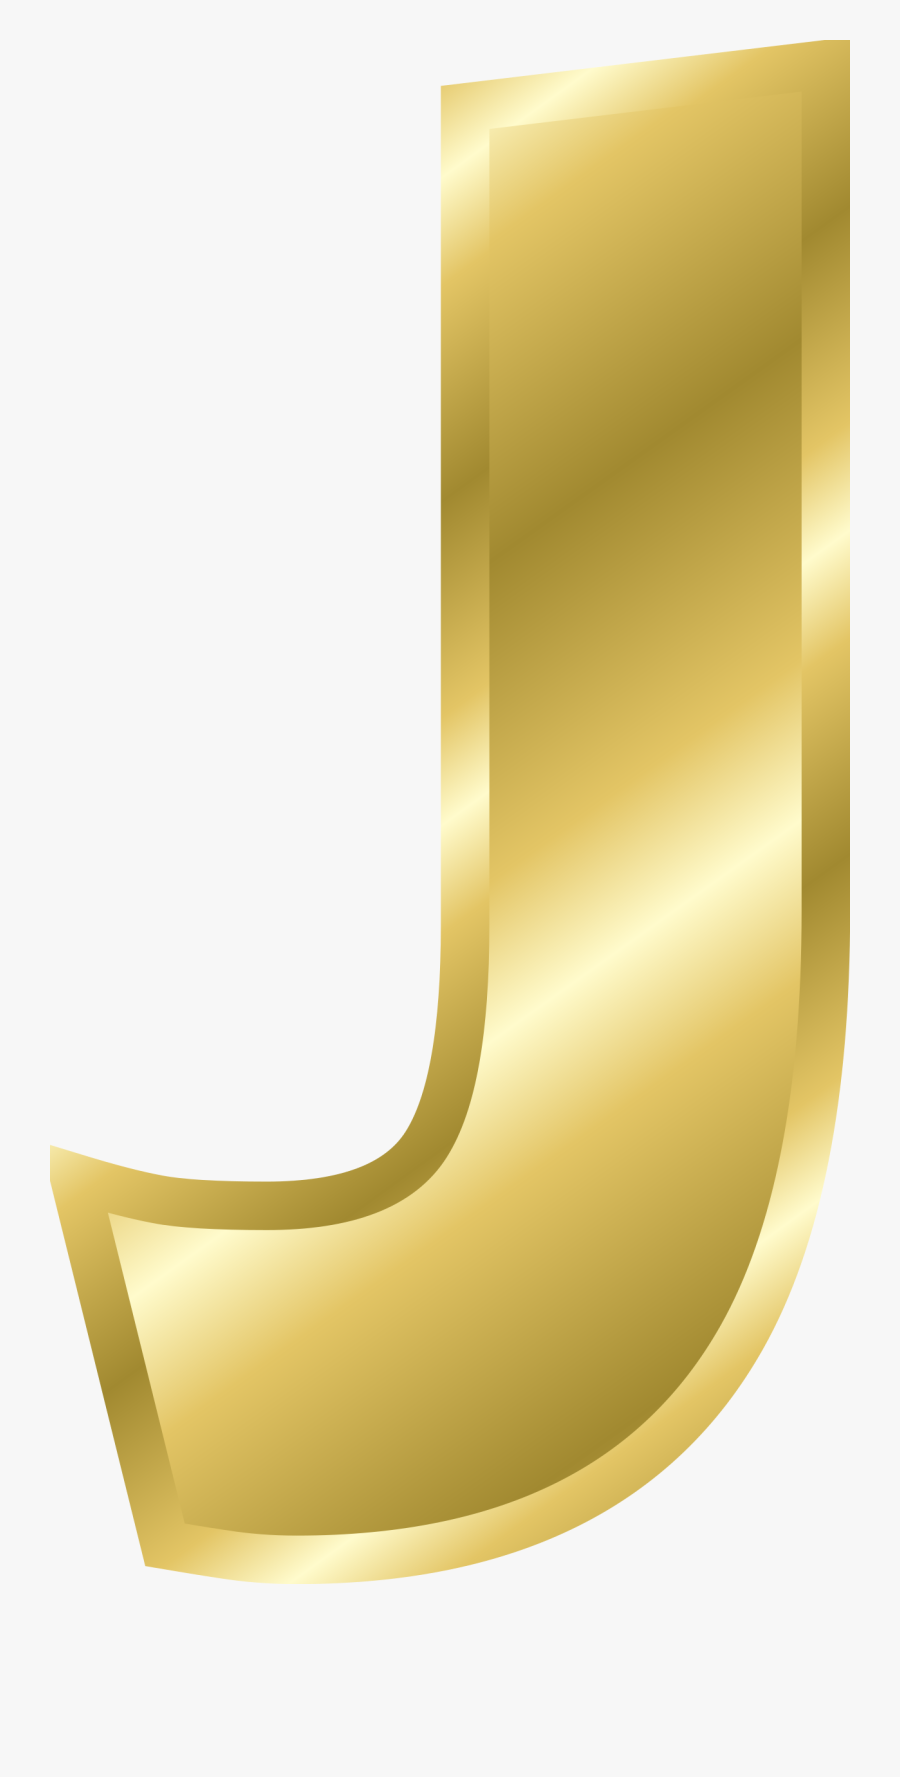 Png Gold Letters - Letter J Gold Png, Transparent Clipart